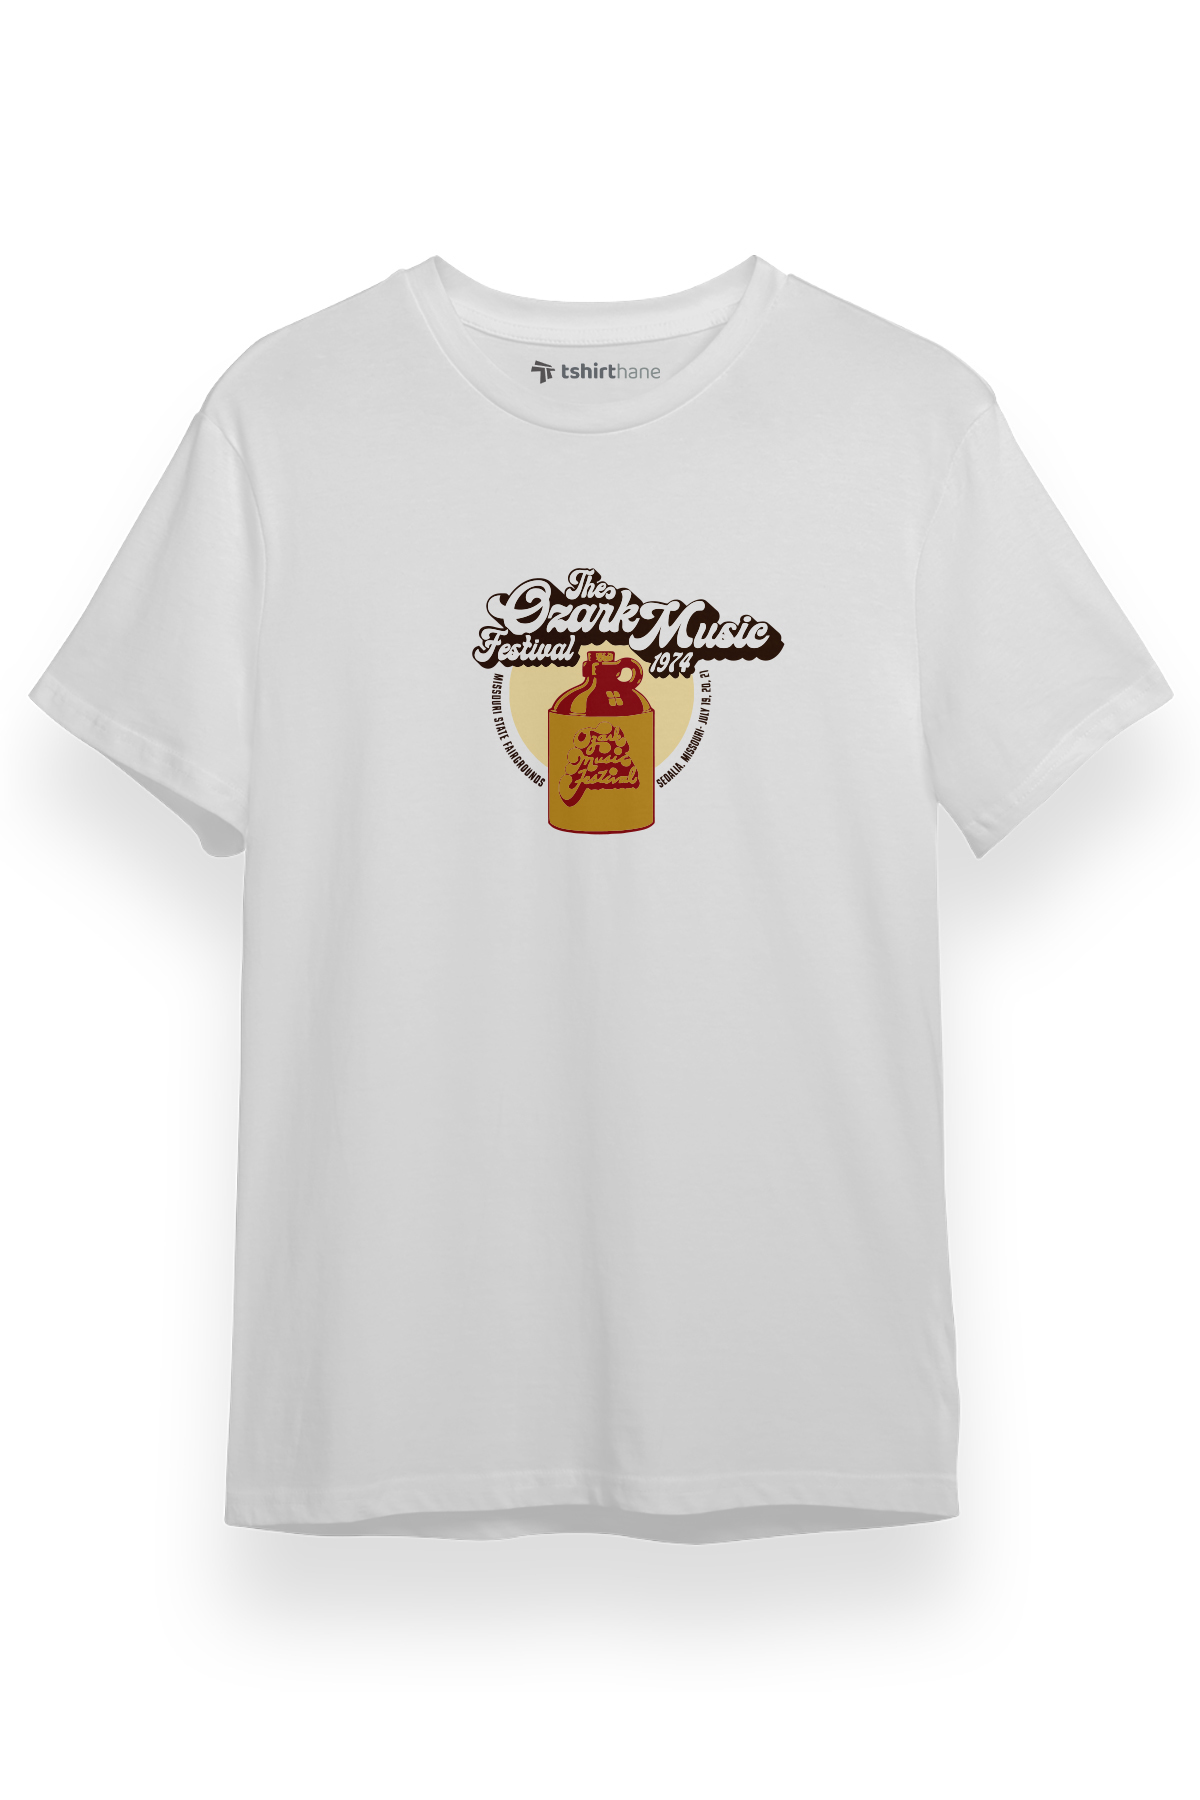 Ozark Music Festival 1974 Logo Beyaz Kısa kol Erkek Tshirt